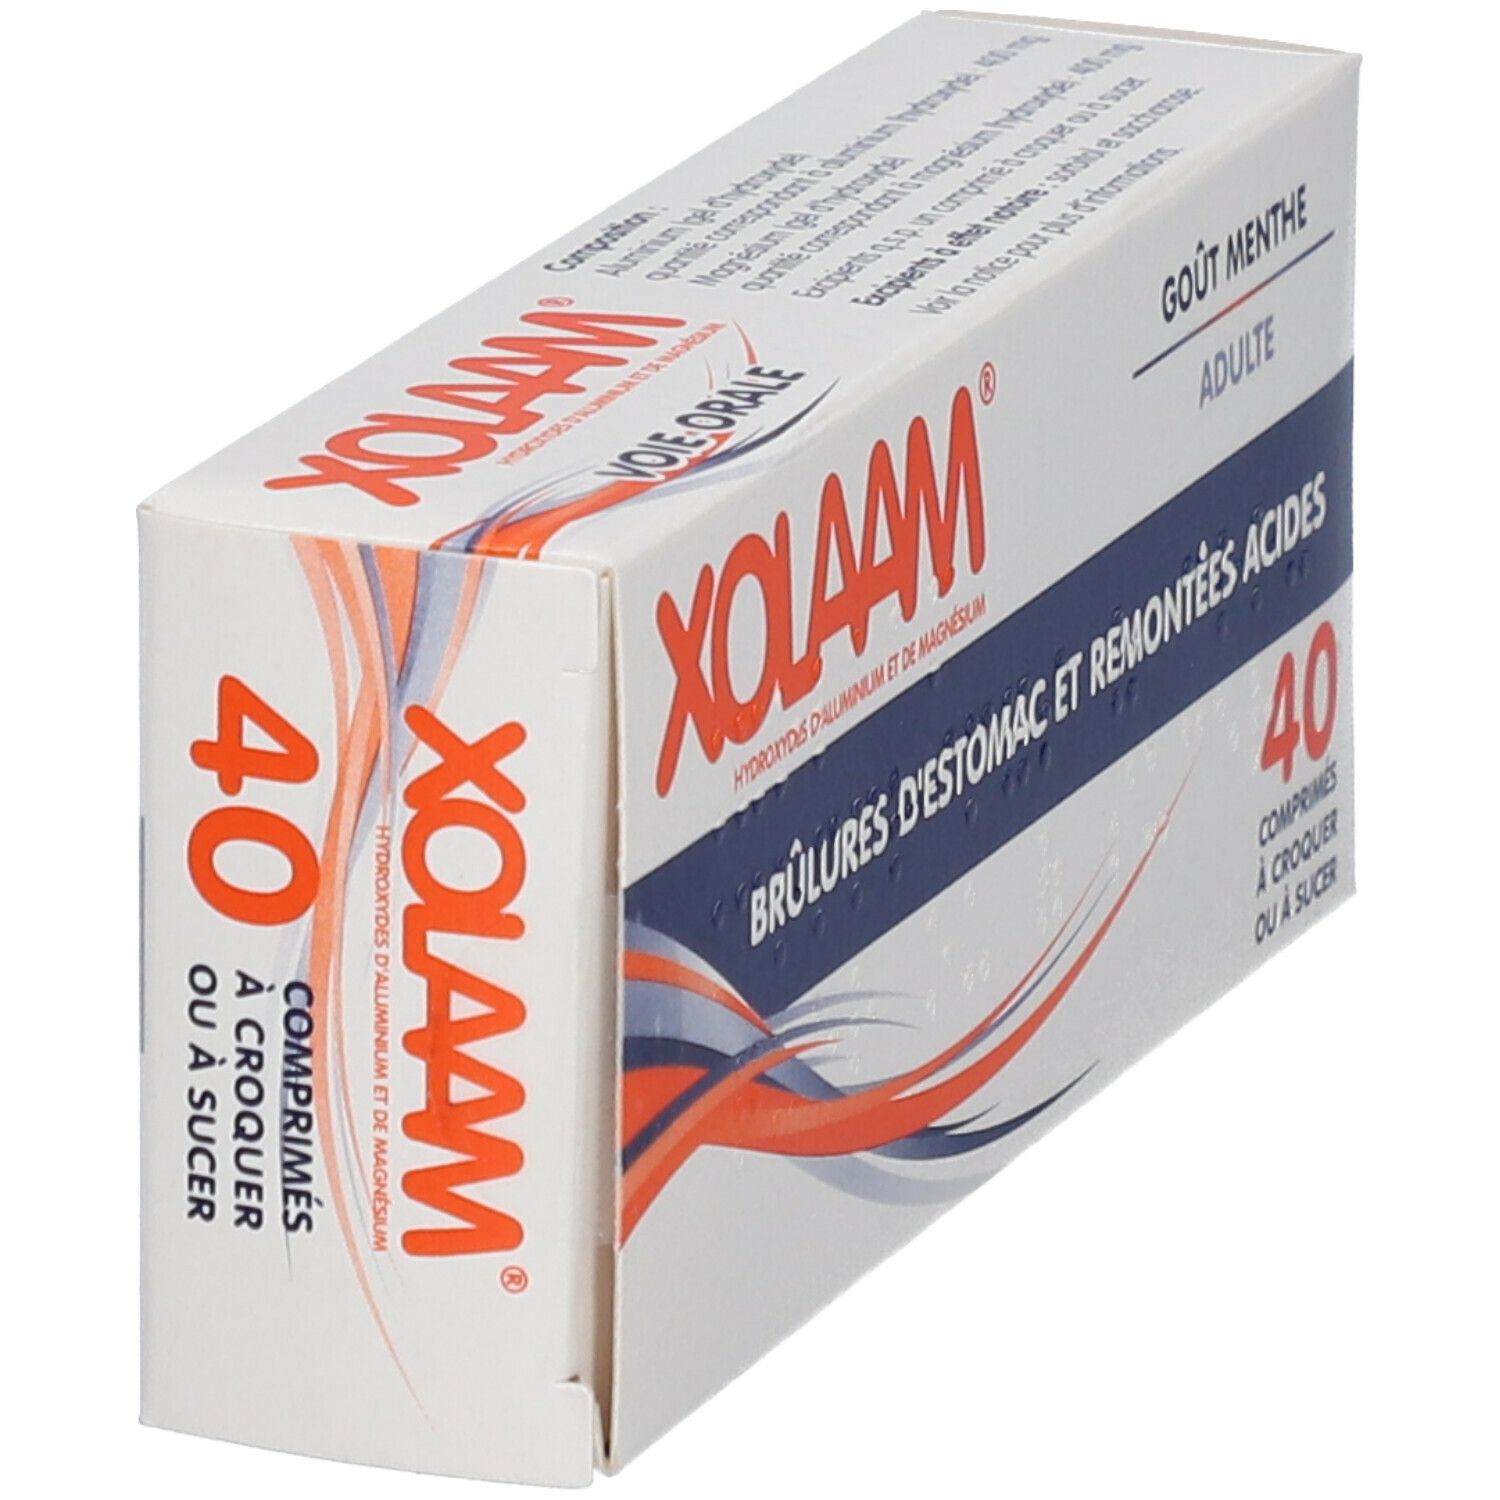 Xolaam® adulte - shop-pharmacie.fr